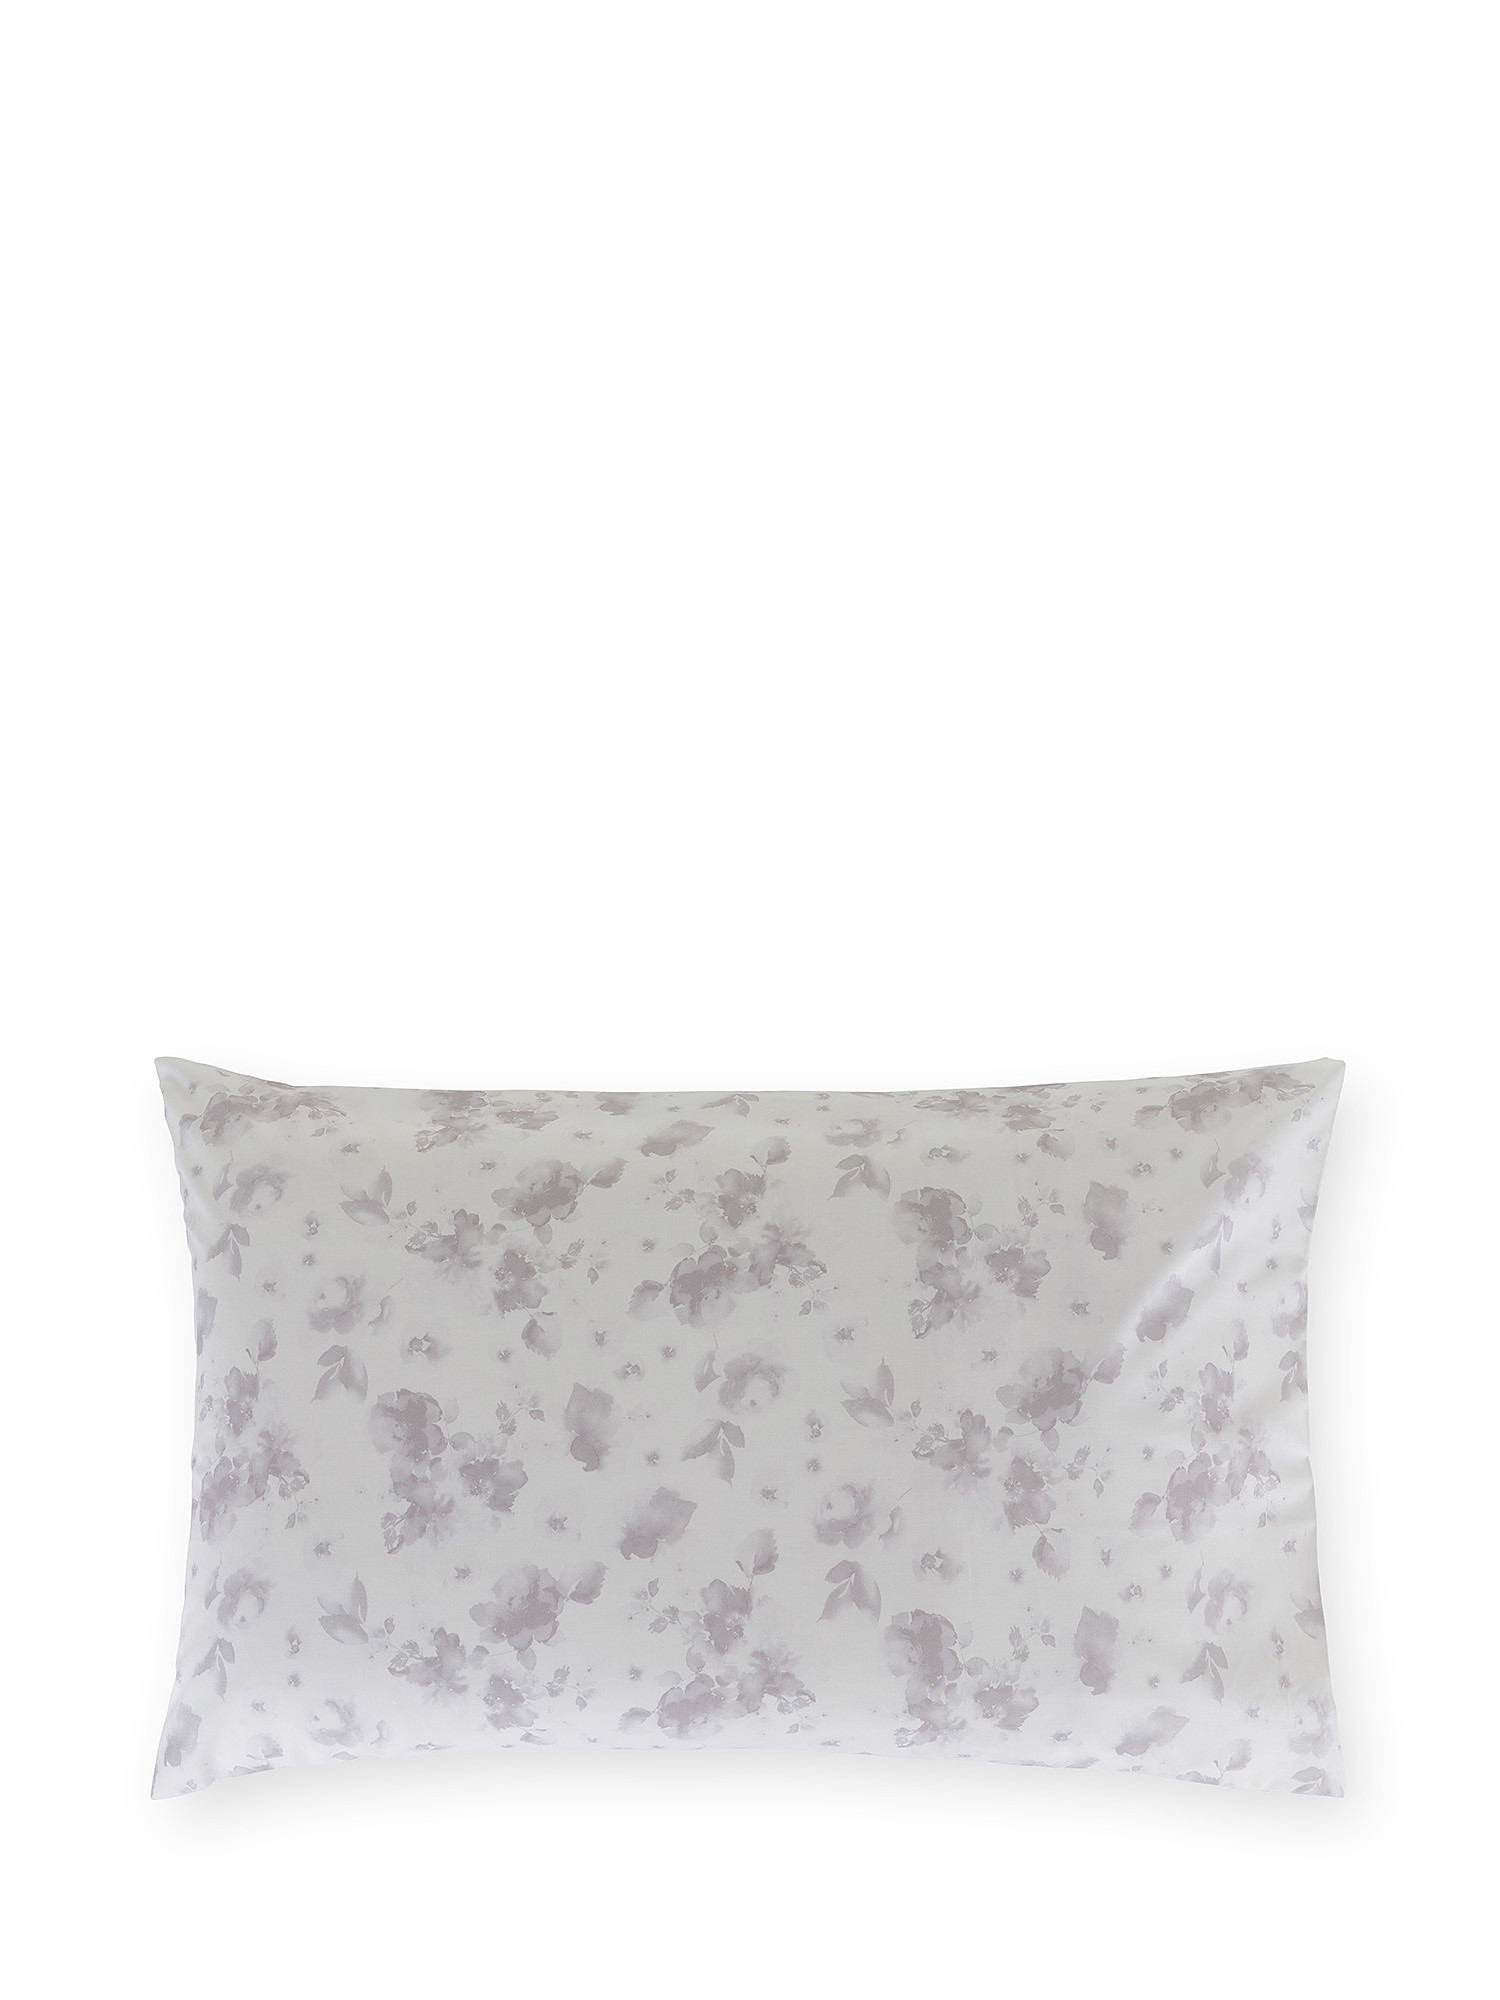 Portofino floral pattern cotton percale pillowcase, White, large image number 0